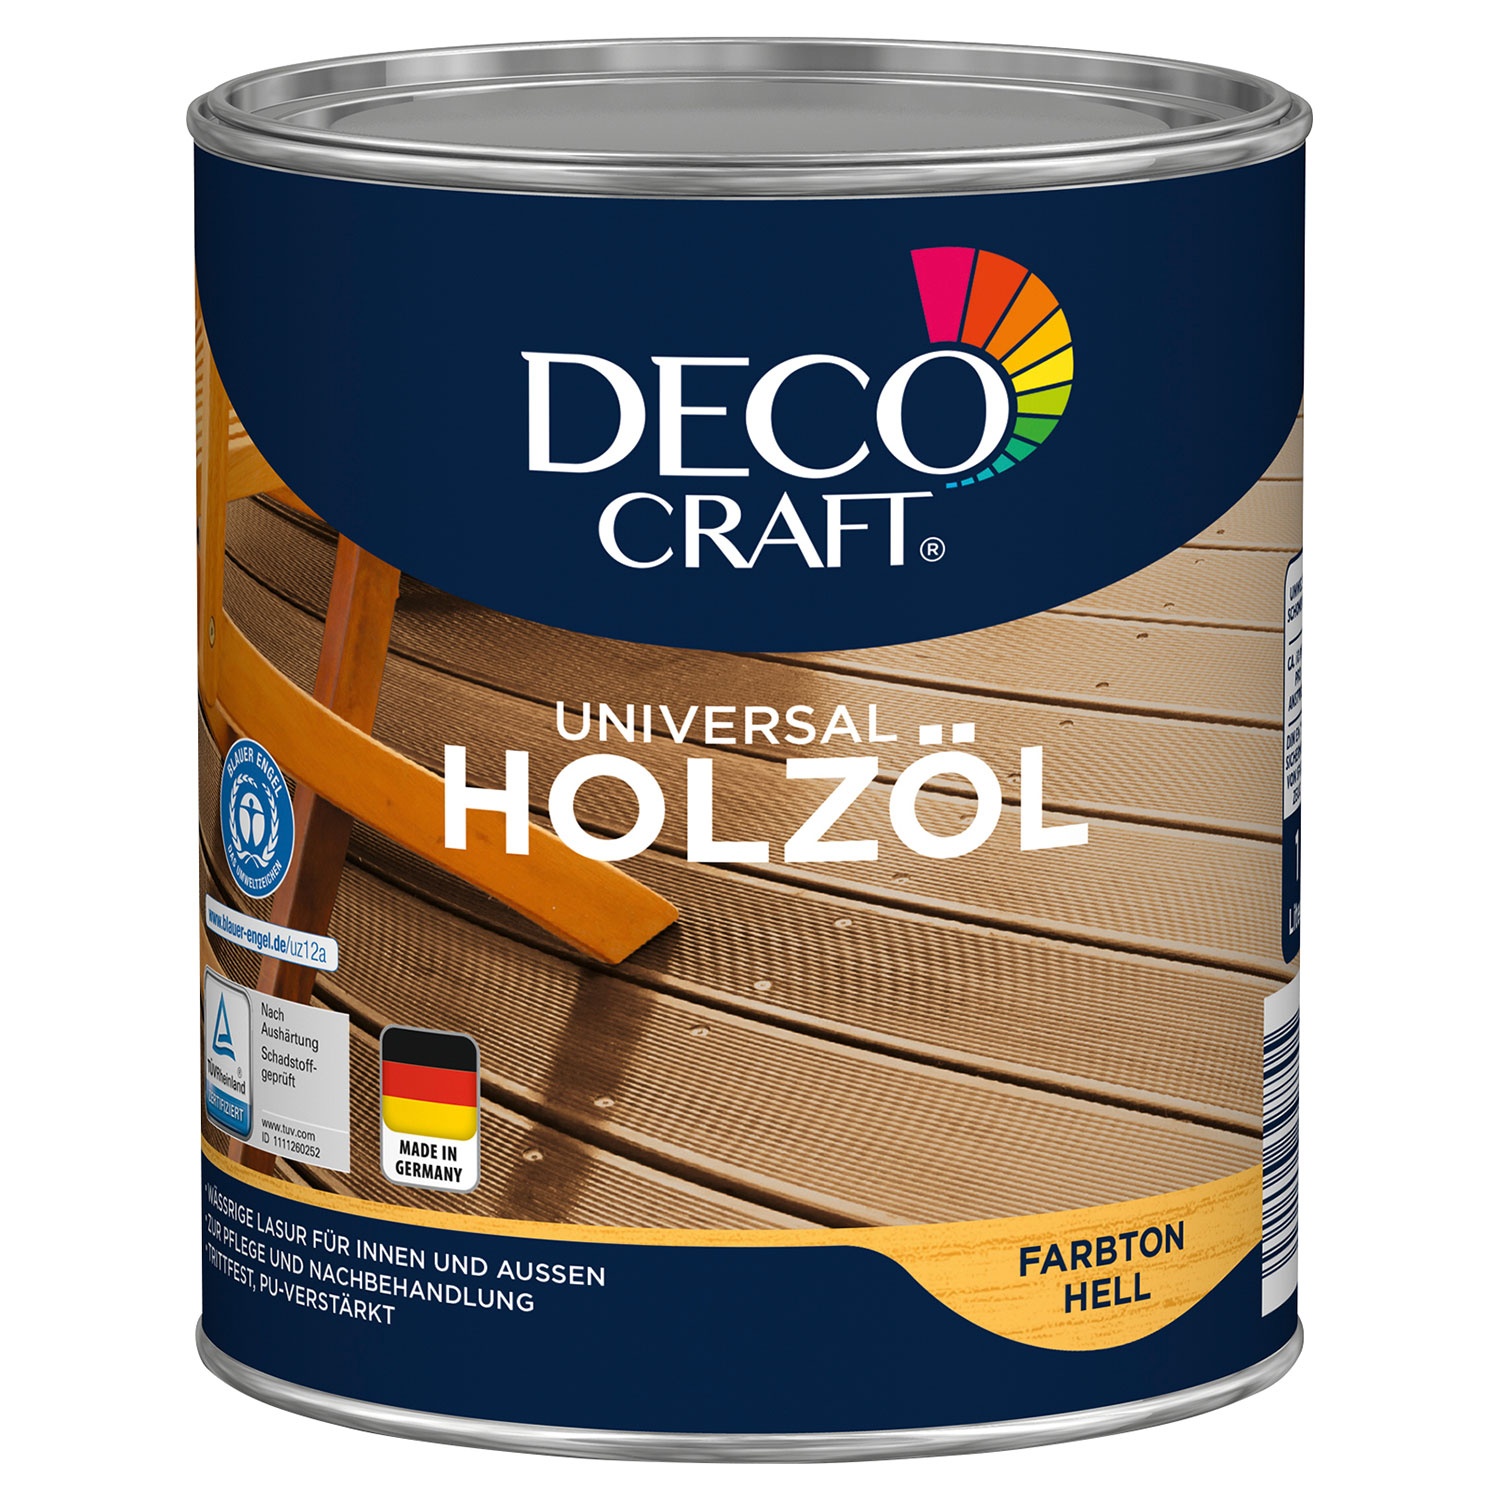 DECO CRAFT Universal-Holzöl 1 l